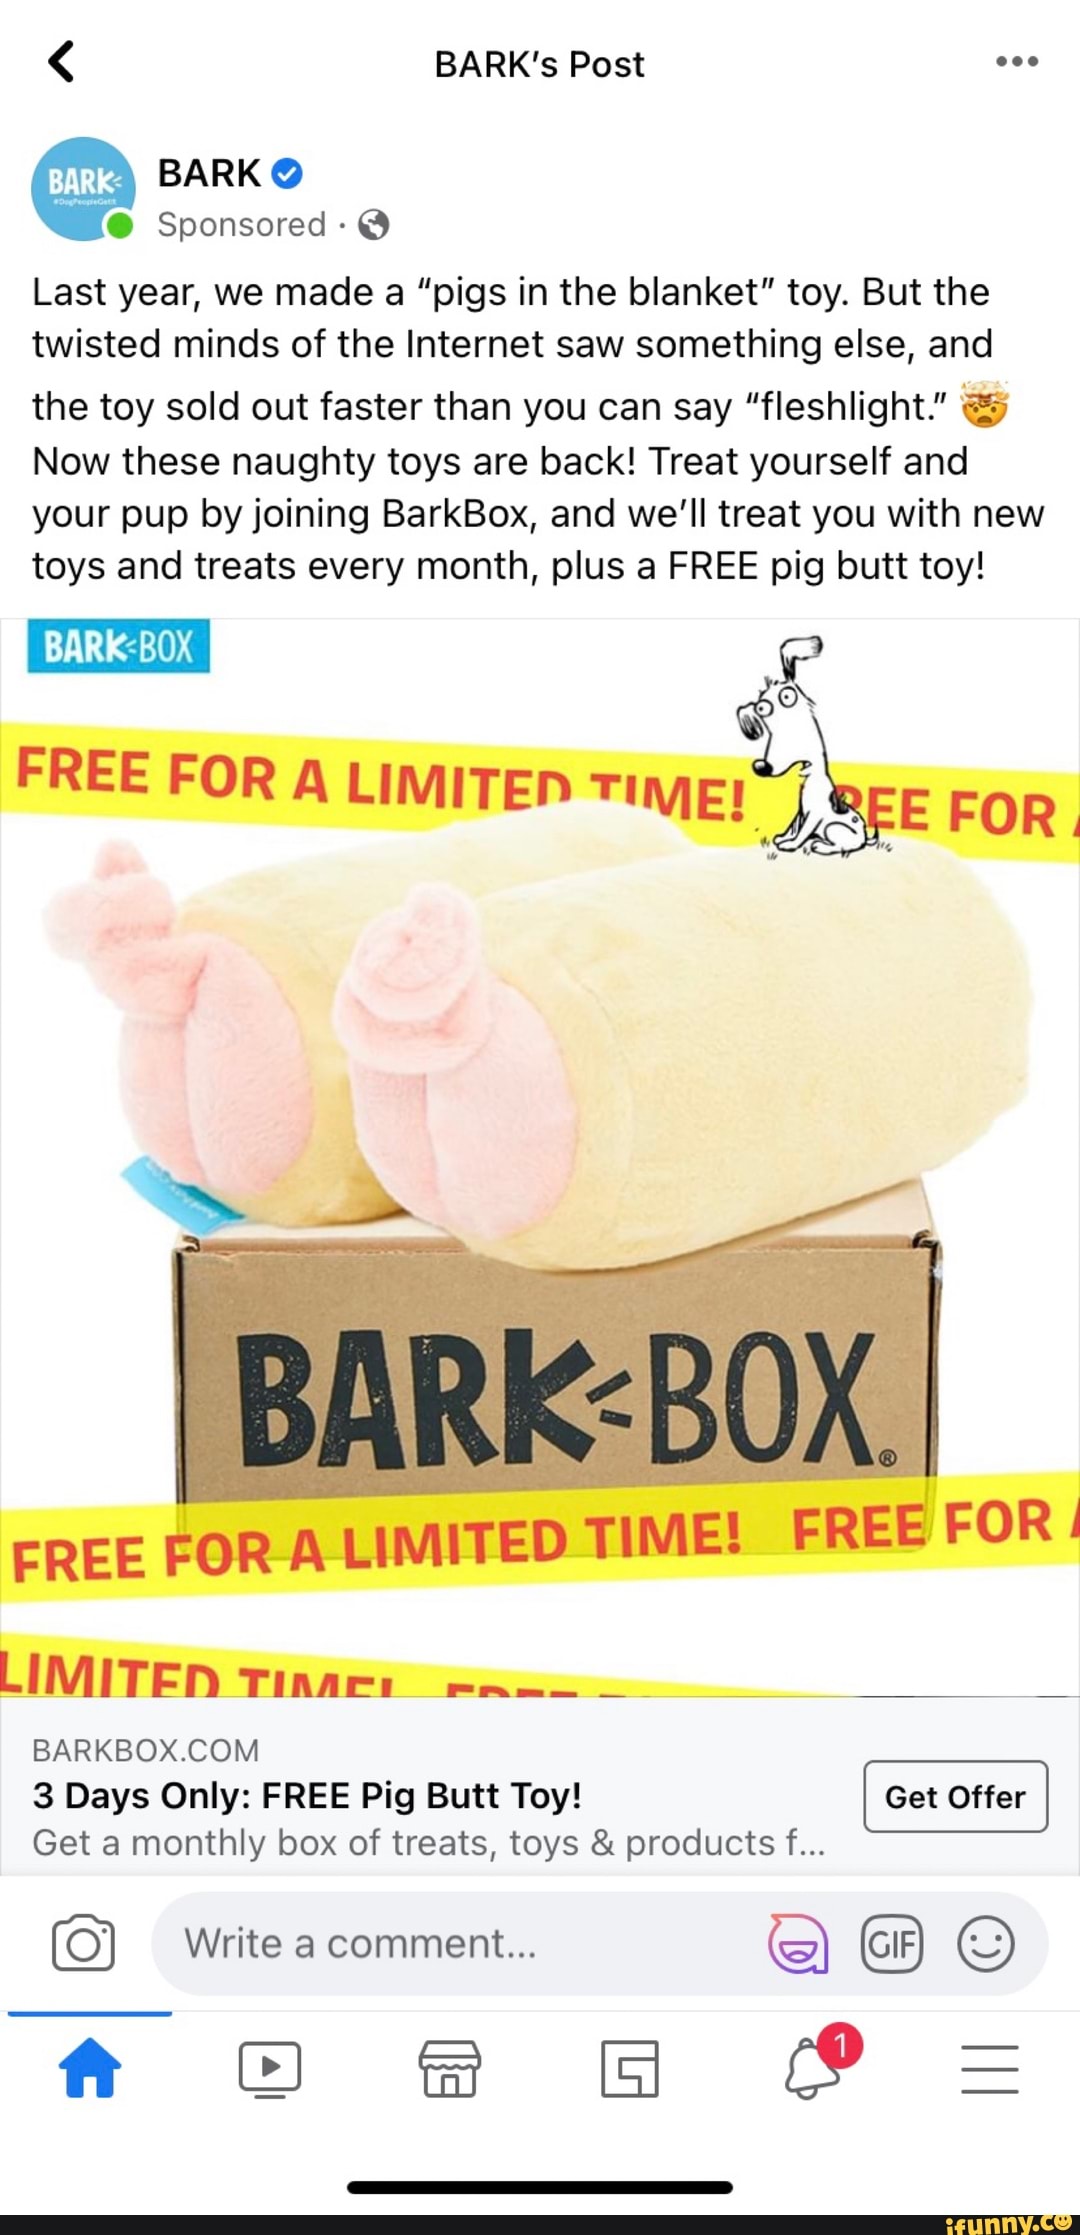 Barkbox pig in a blanket toy